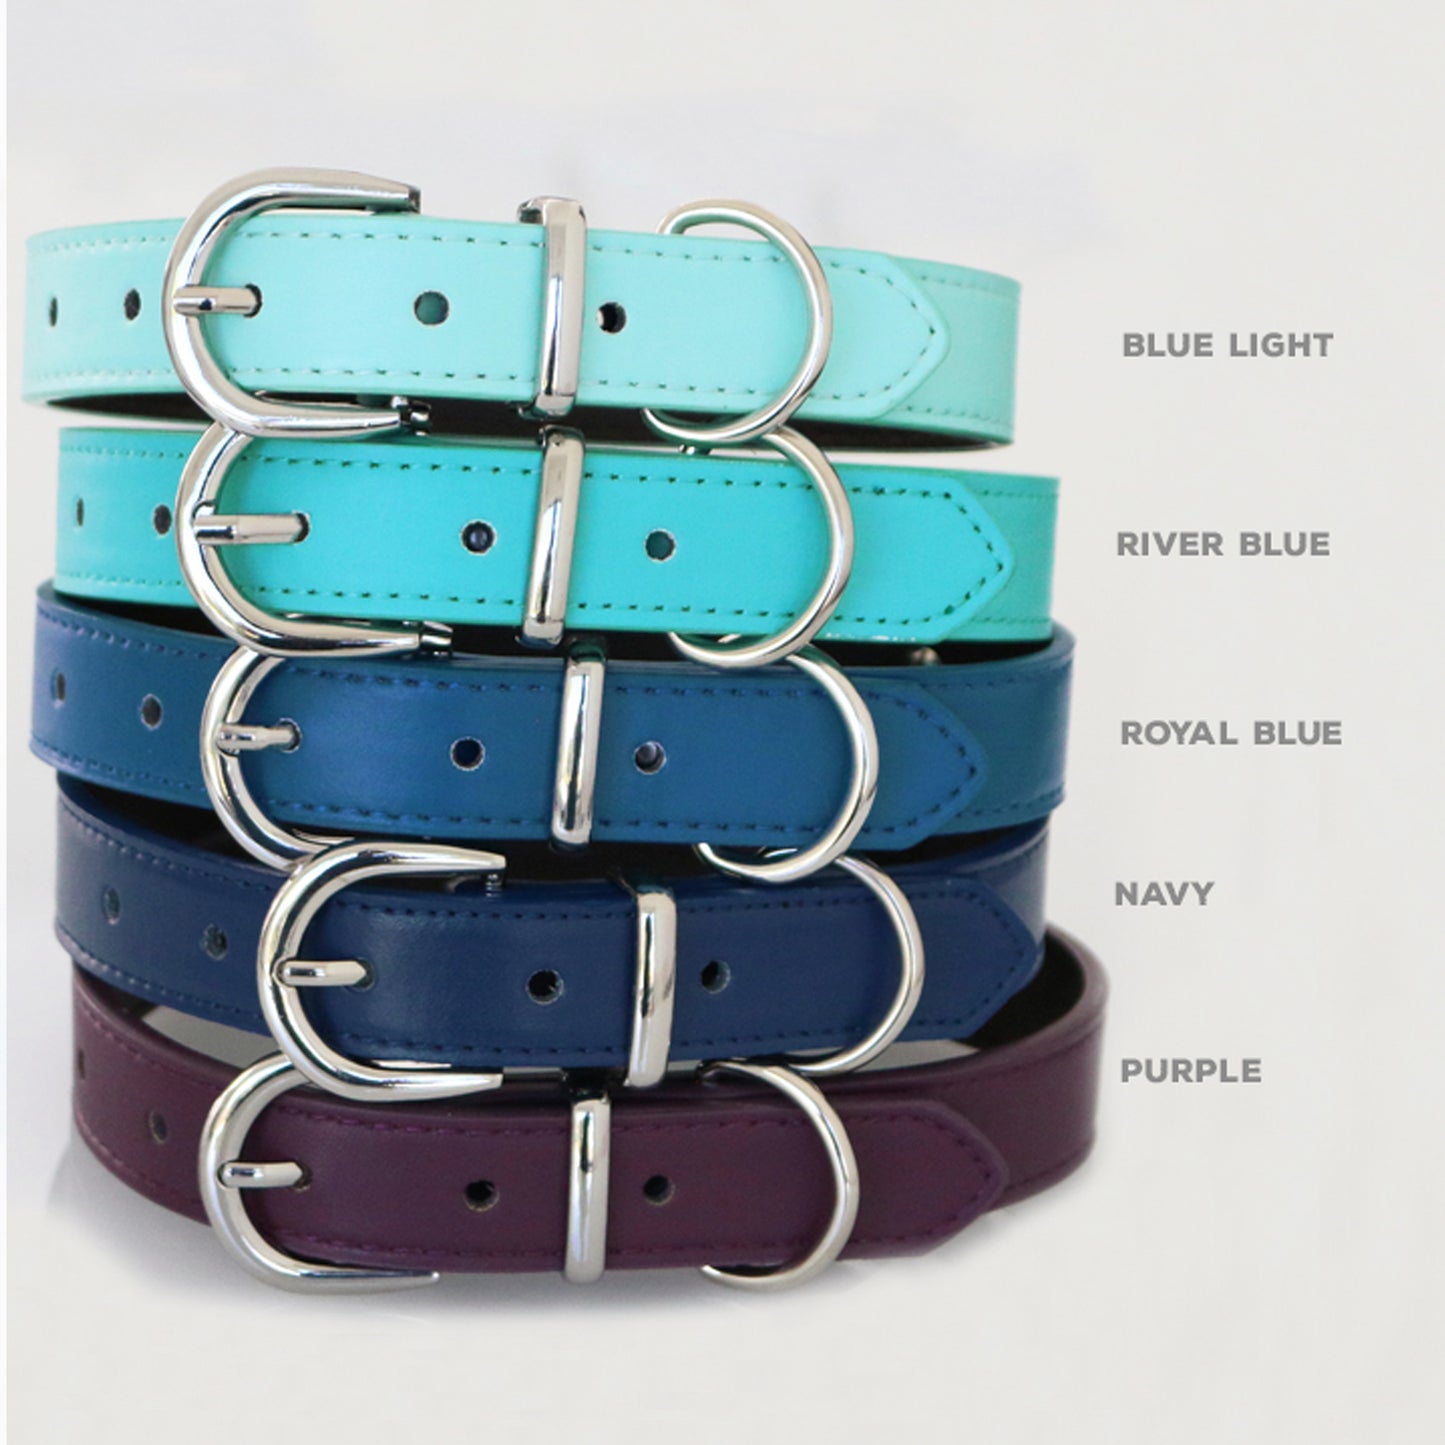 Purple Dog Bow Tie ring bearer Collar, Pet Wedding, Puppy Love, Proposal, Handmade Gifts , Wedding dog collar